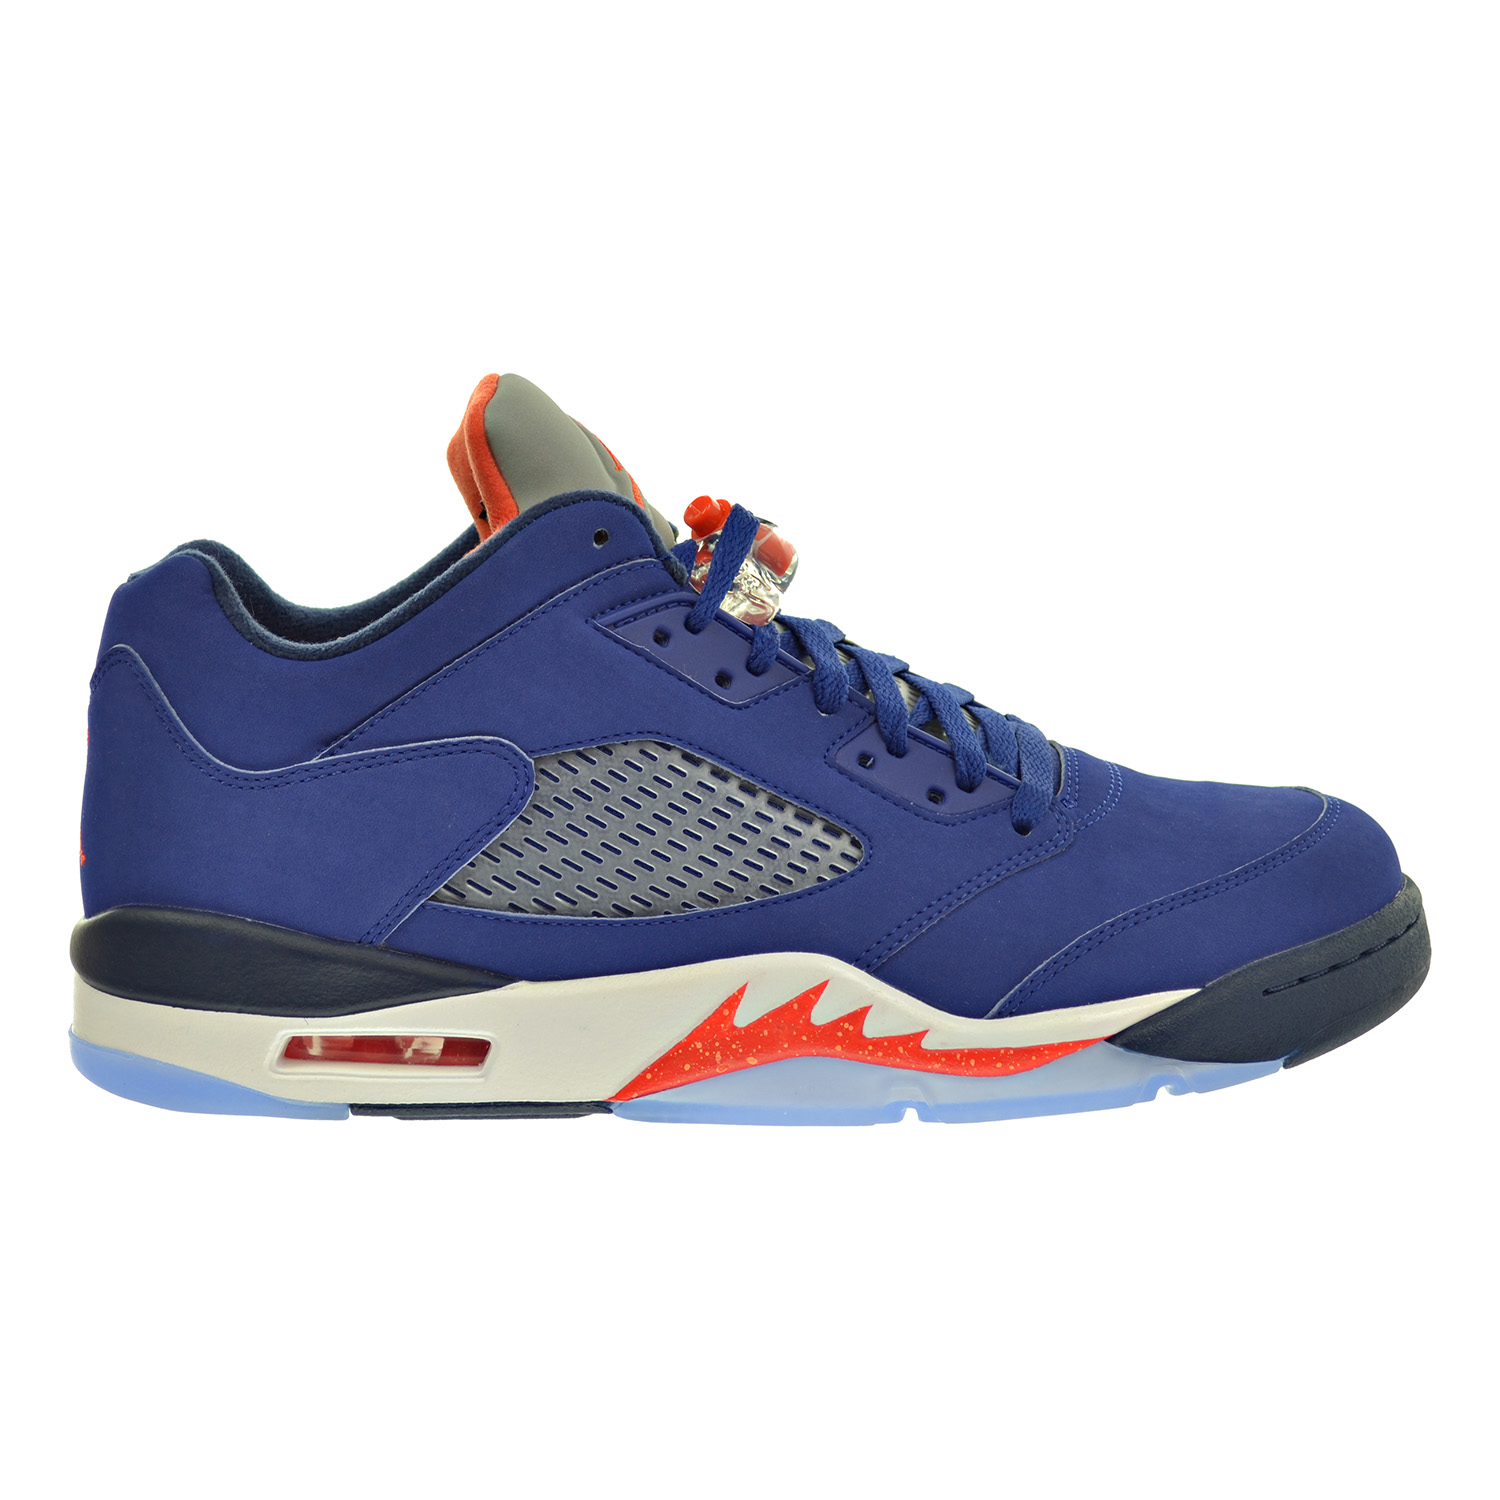 Michael Jordan Air Jordan 5 Retro Men S Shoes Deep Royal Blue Team Orange Midnight Navy 417